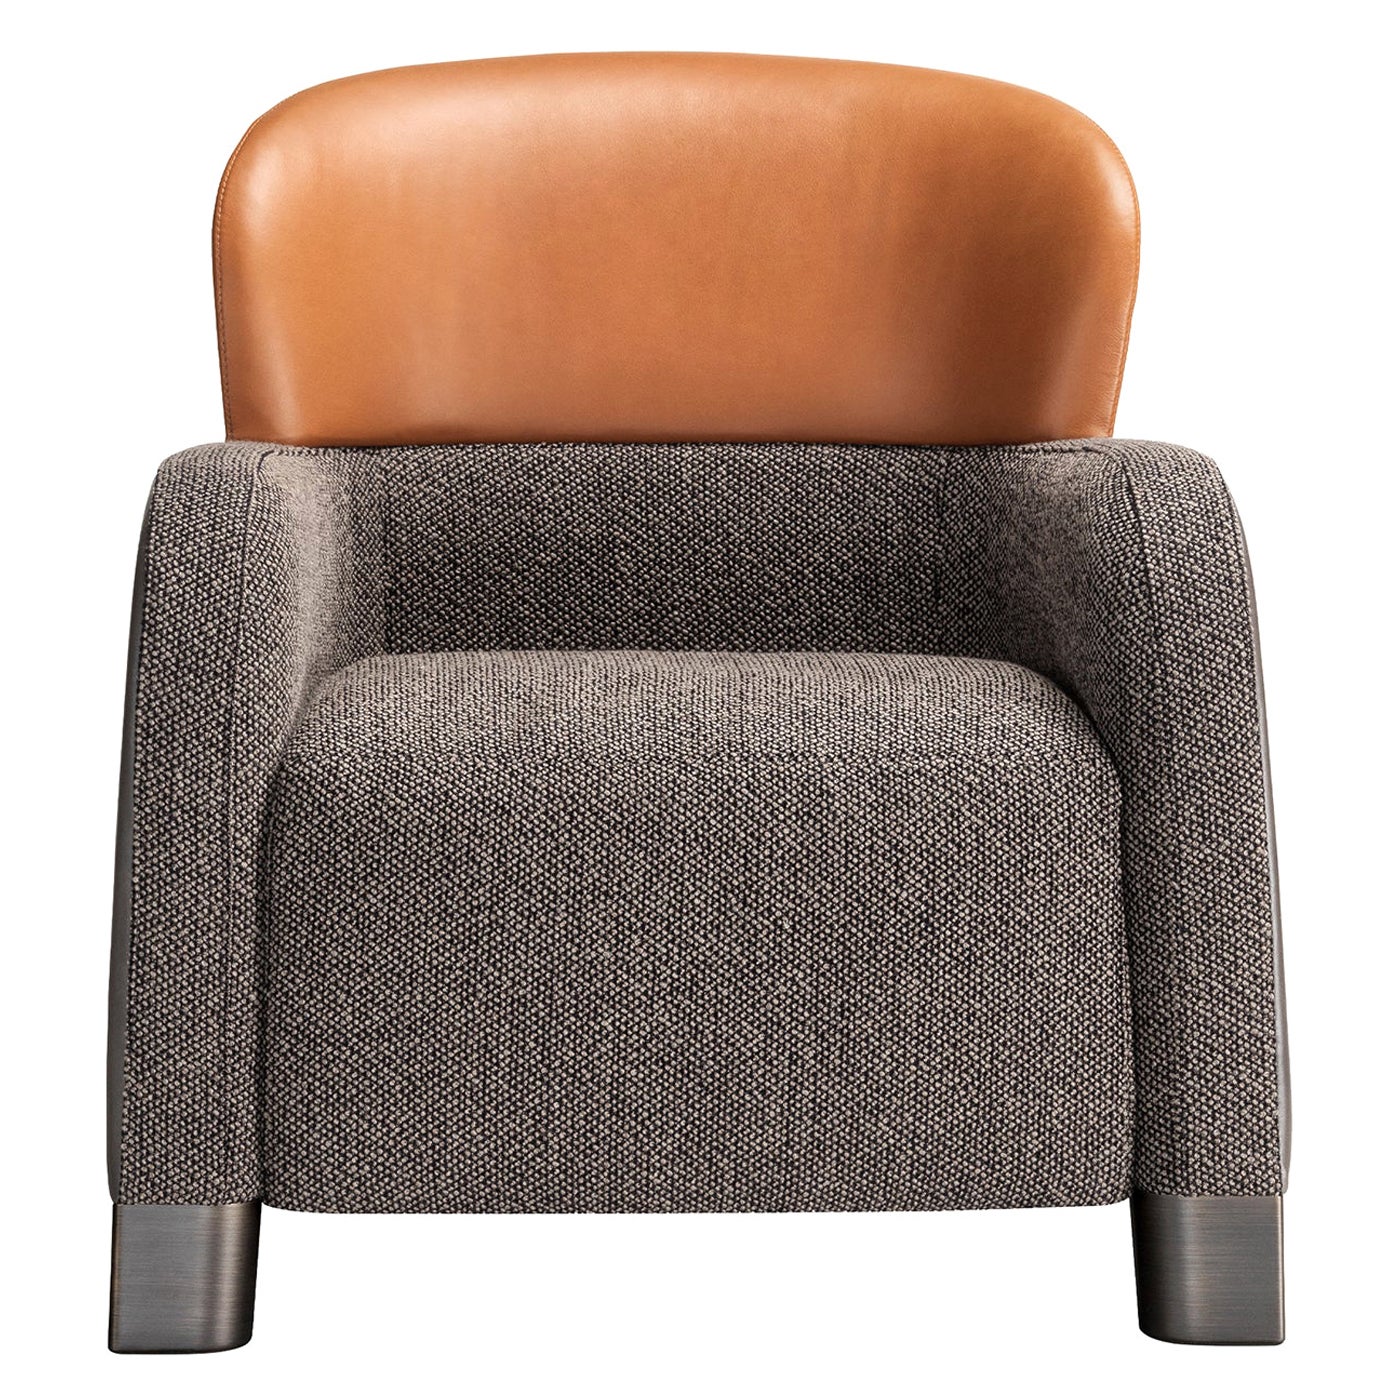 Bucket Brown/Gray Armchair with Low Headrest